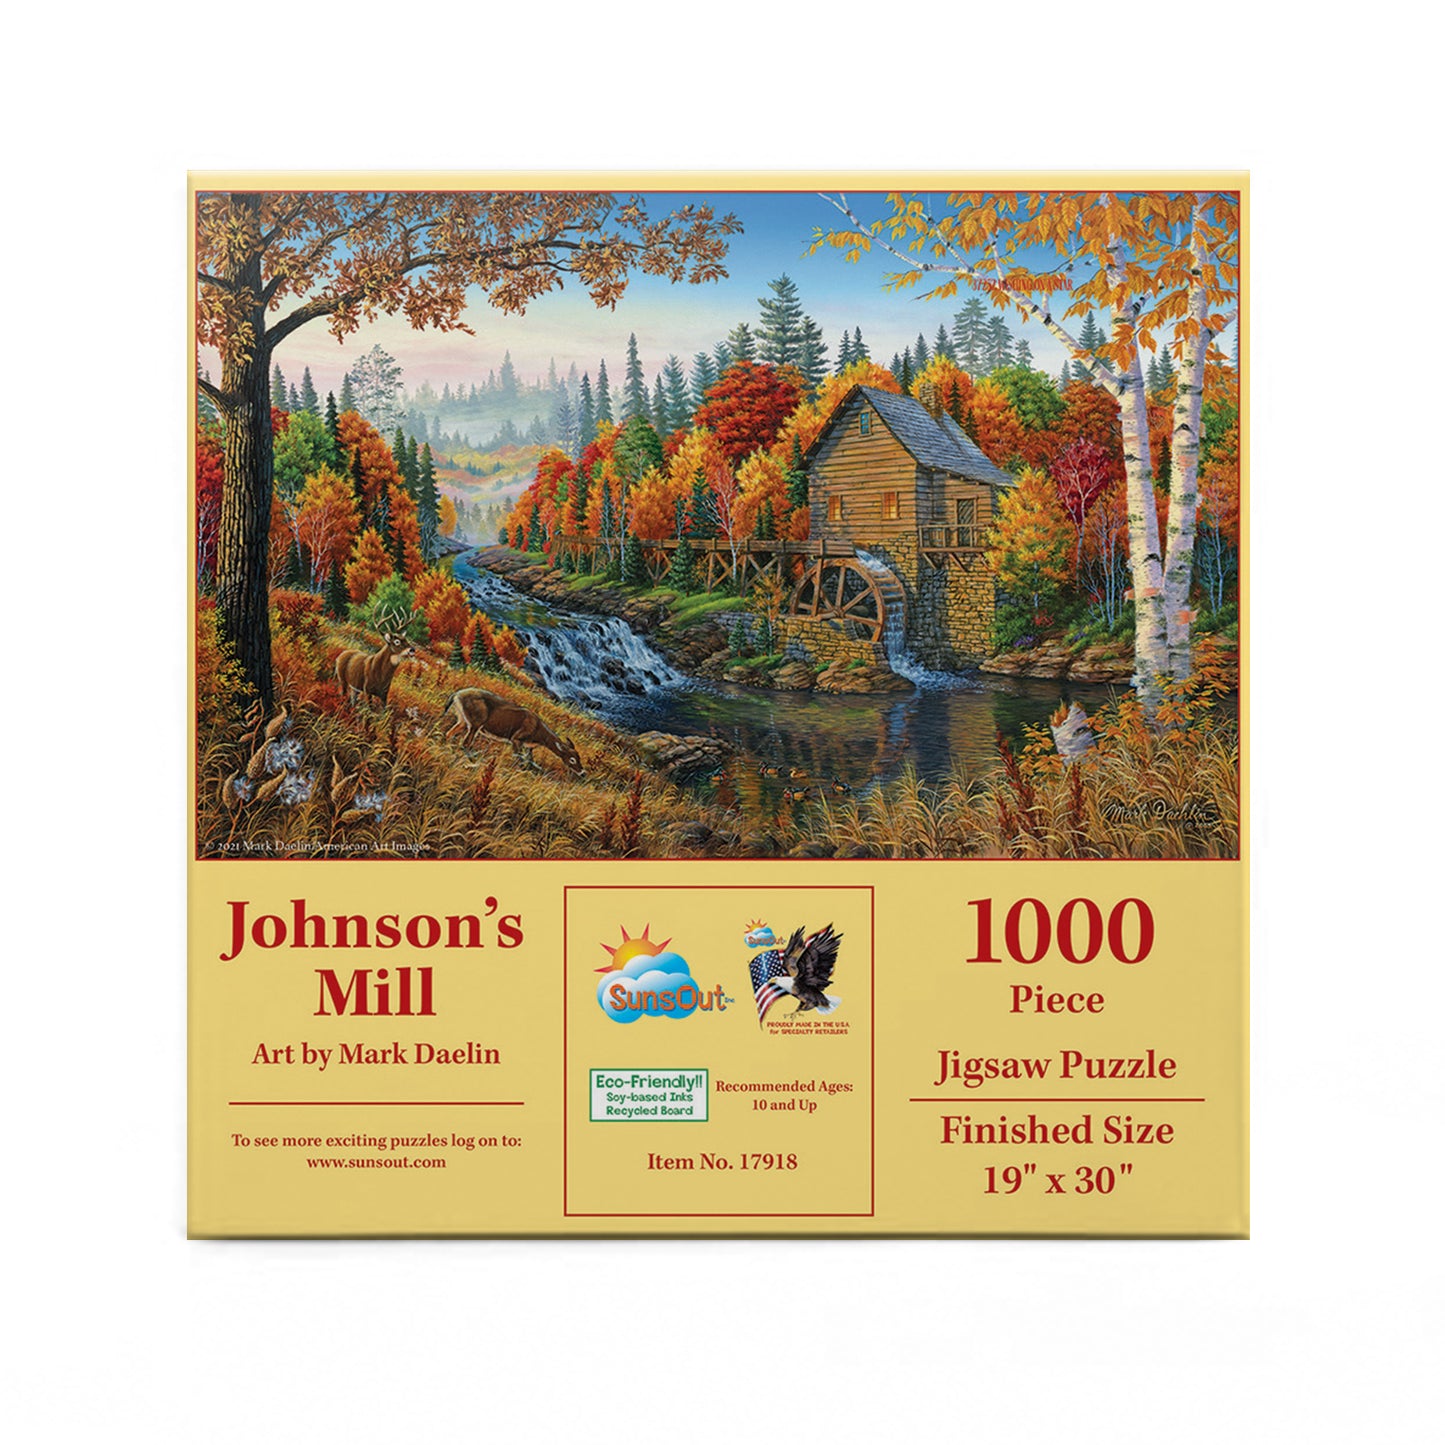 Johnson's Mill - 1000 Piece Jigsaw Puzzle